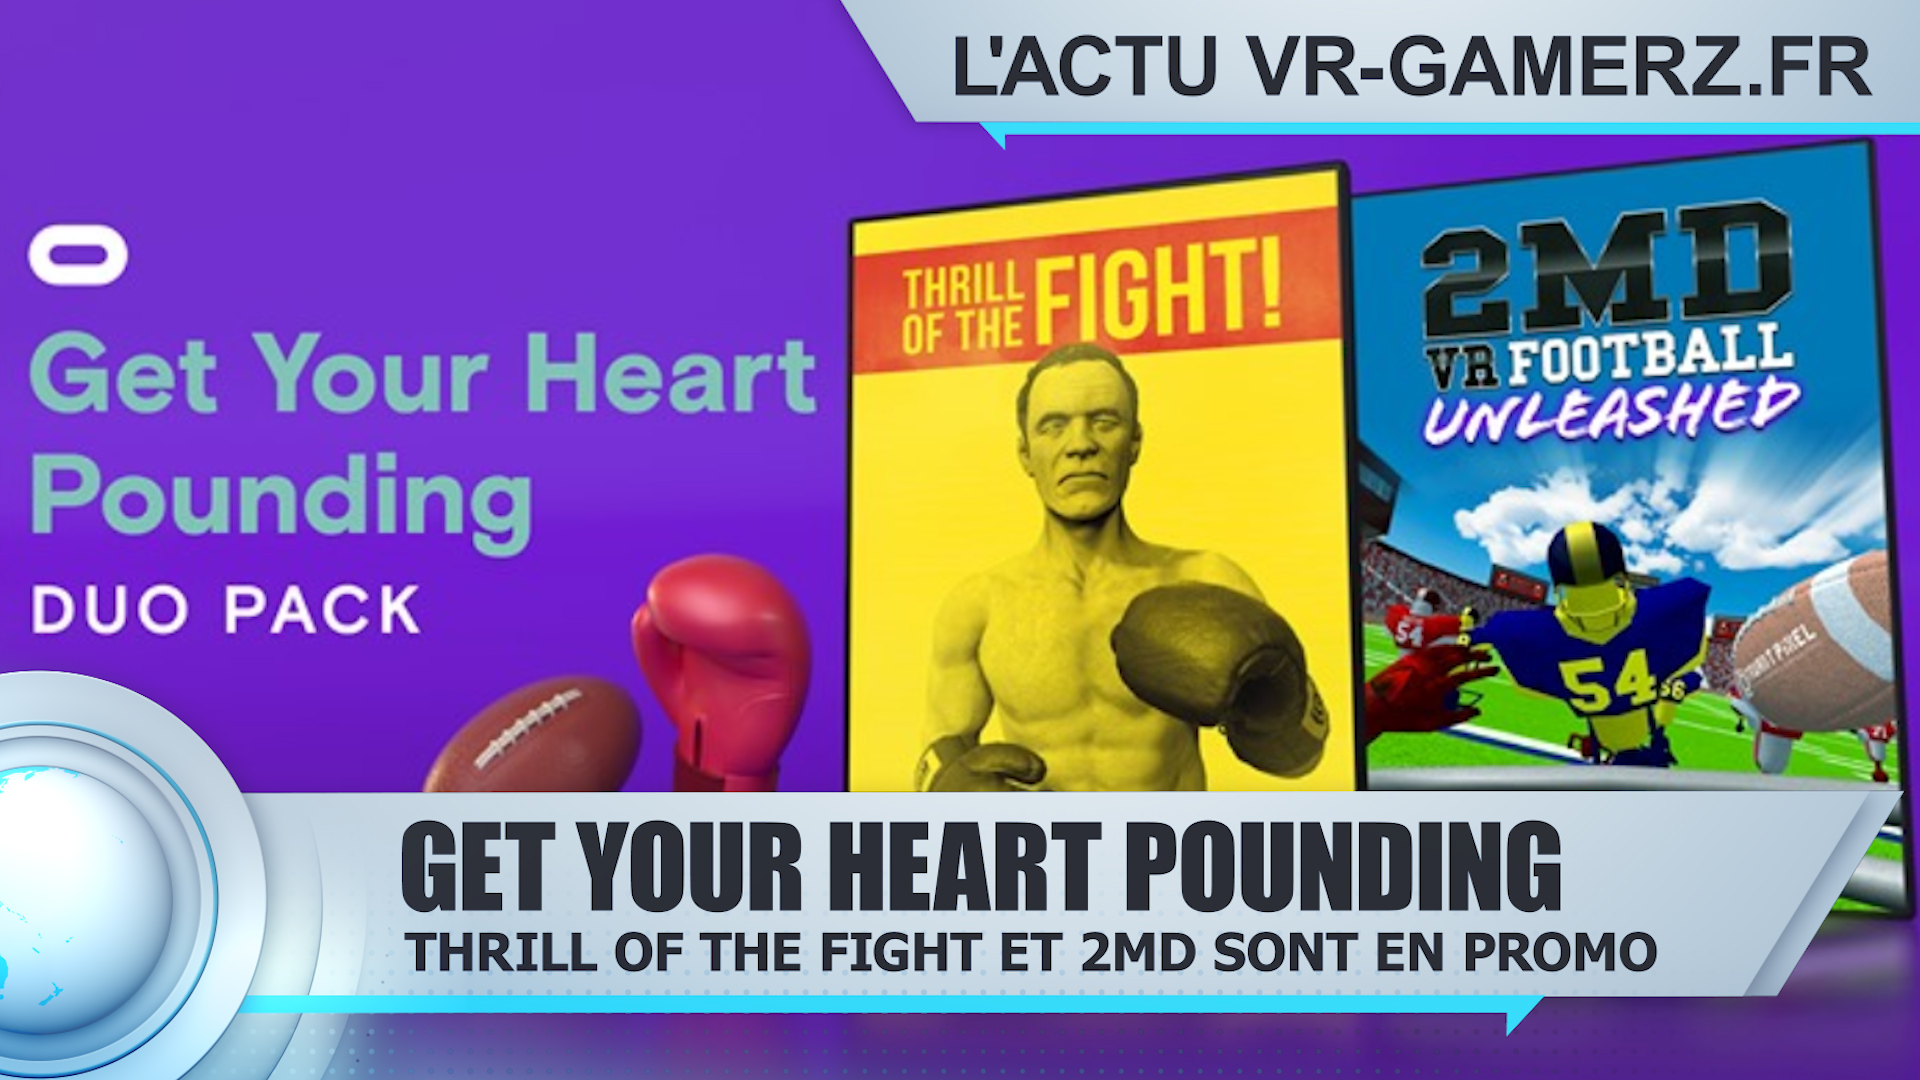 Thrill of the fight et 2MD VR Football VR sont en promotion sur Oculus quest